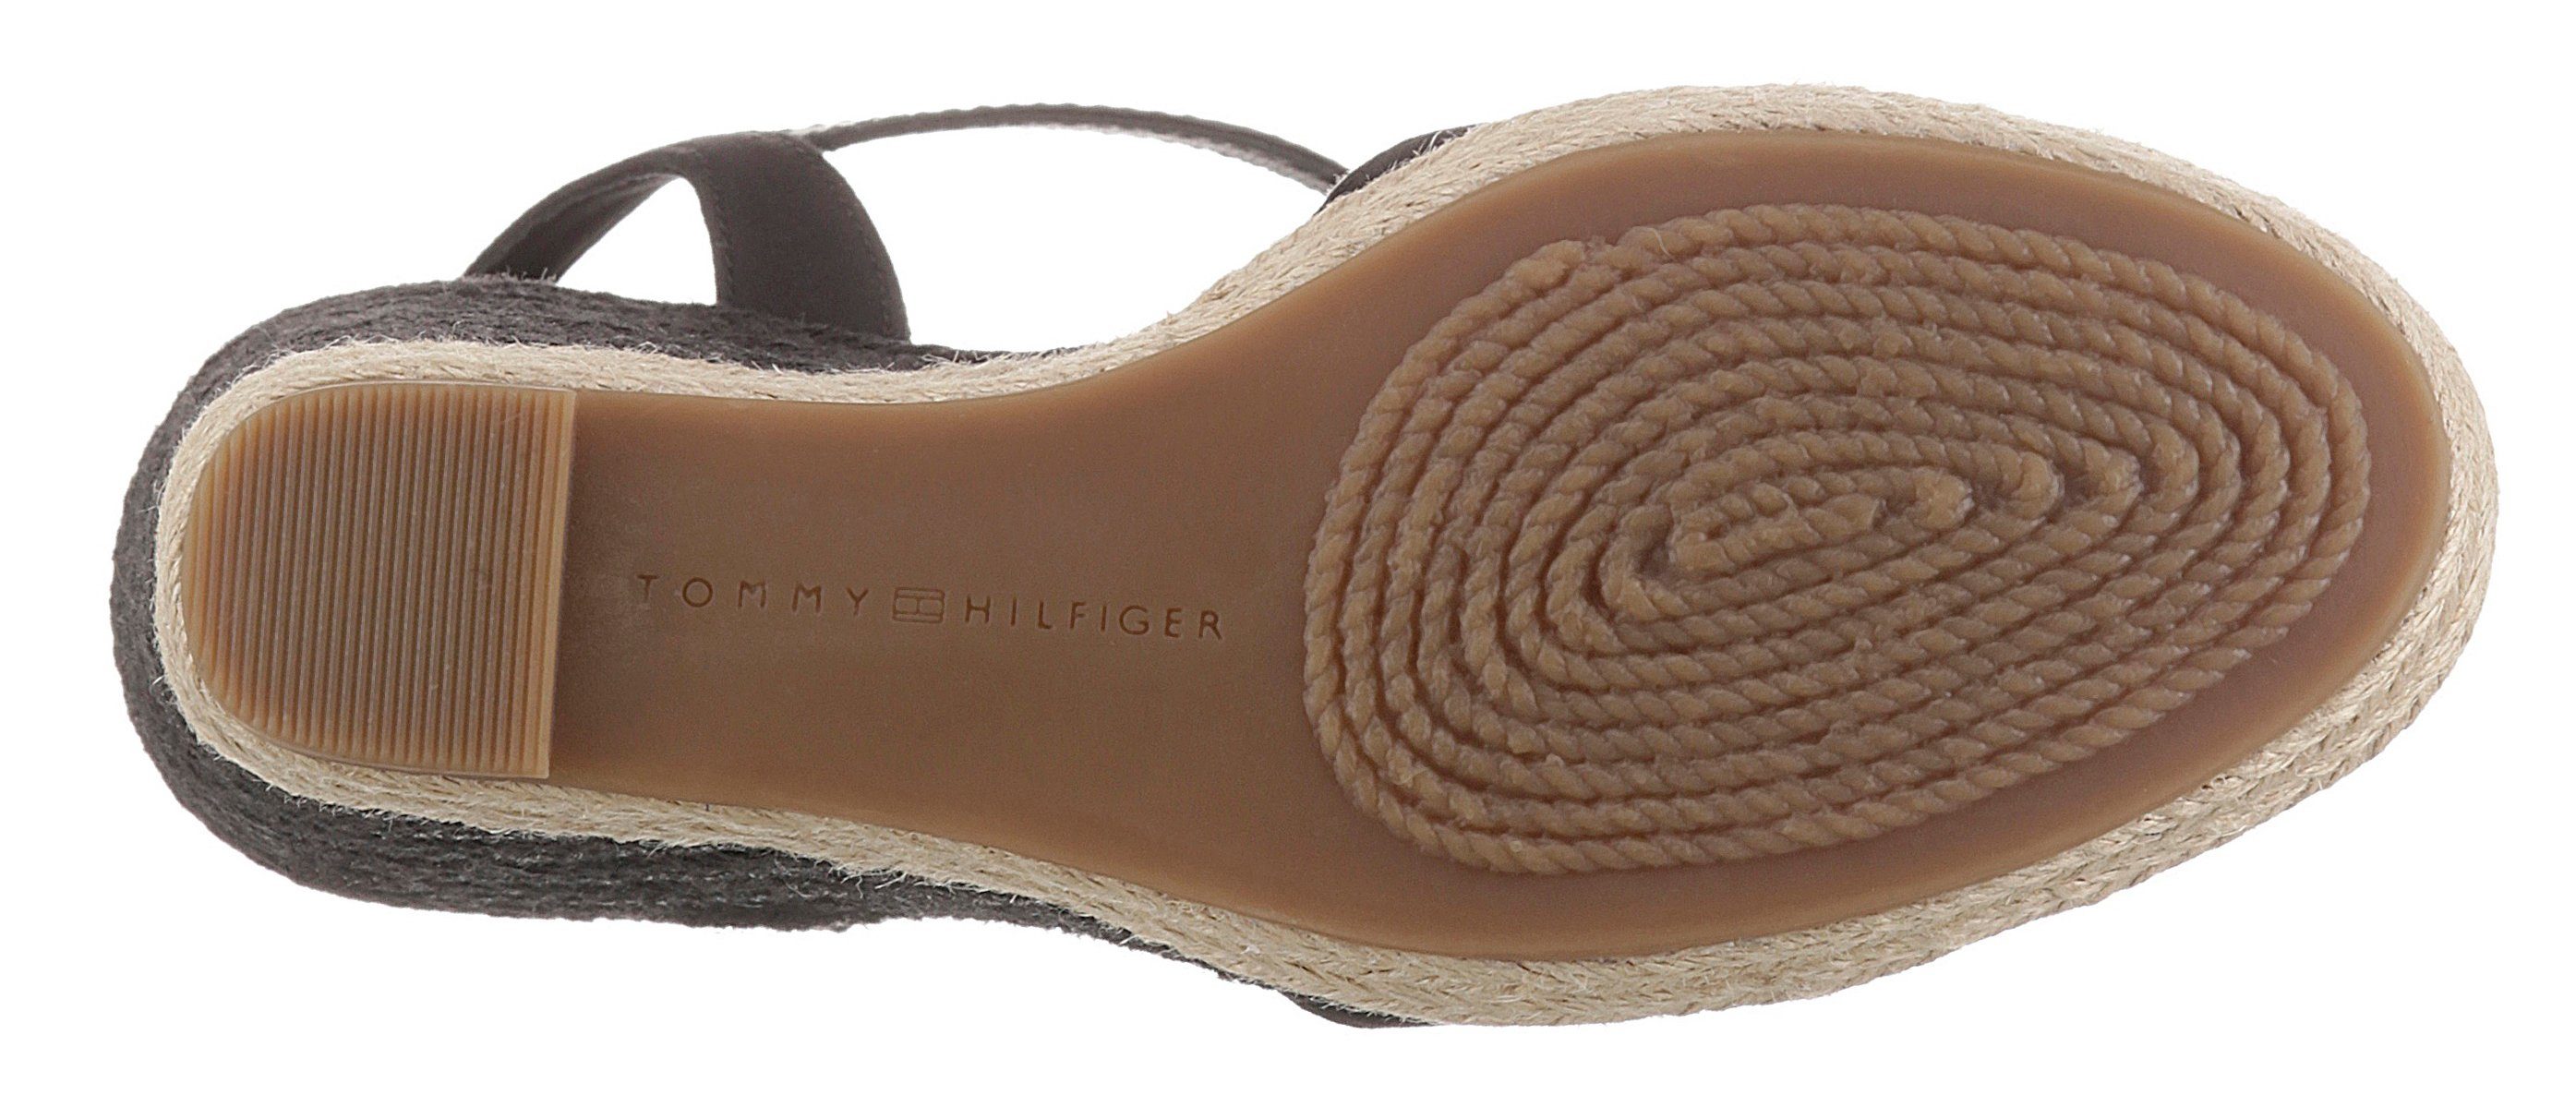 Tommy Hilfiger BASIC CLOSED TOE bezogenem Sandalette HIGH Keilabsatz mit Black WEDGE